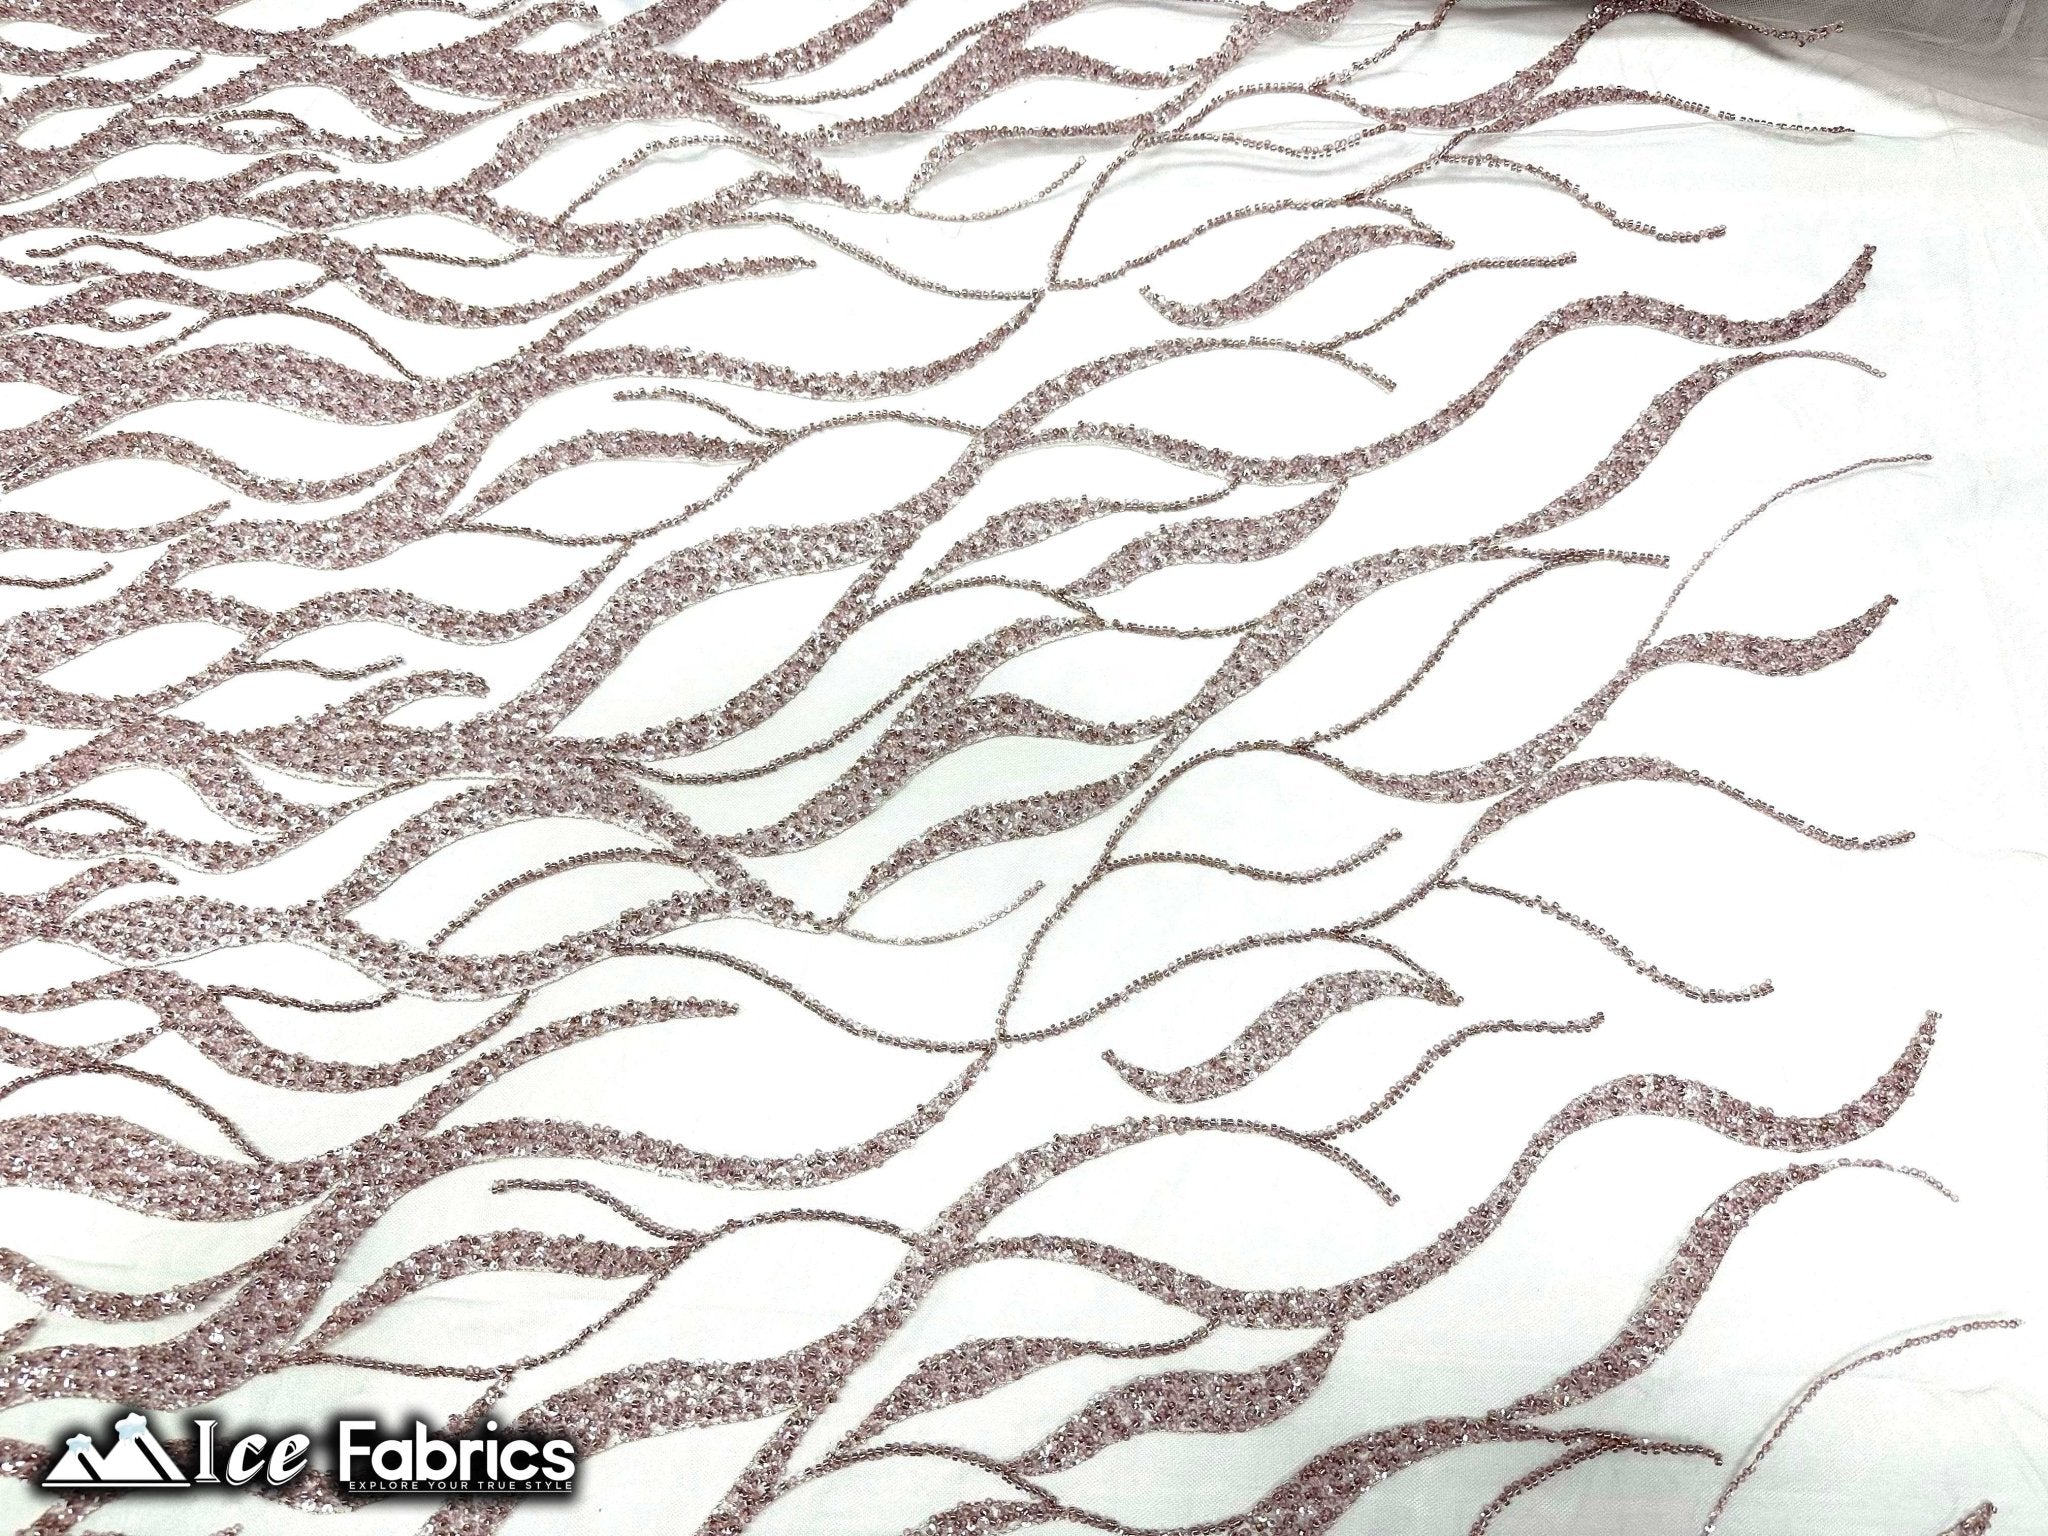 Elegant Heavy Beaded Fabric Lace Fabric with SequinICE FABRICSICE FABRICSSilverBy The Yard (54" Wide)Elegant Heavy Beaded Fabric Lace Fabric with Sequin ICE FABRICS Silver